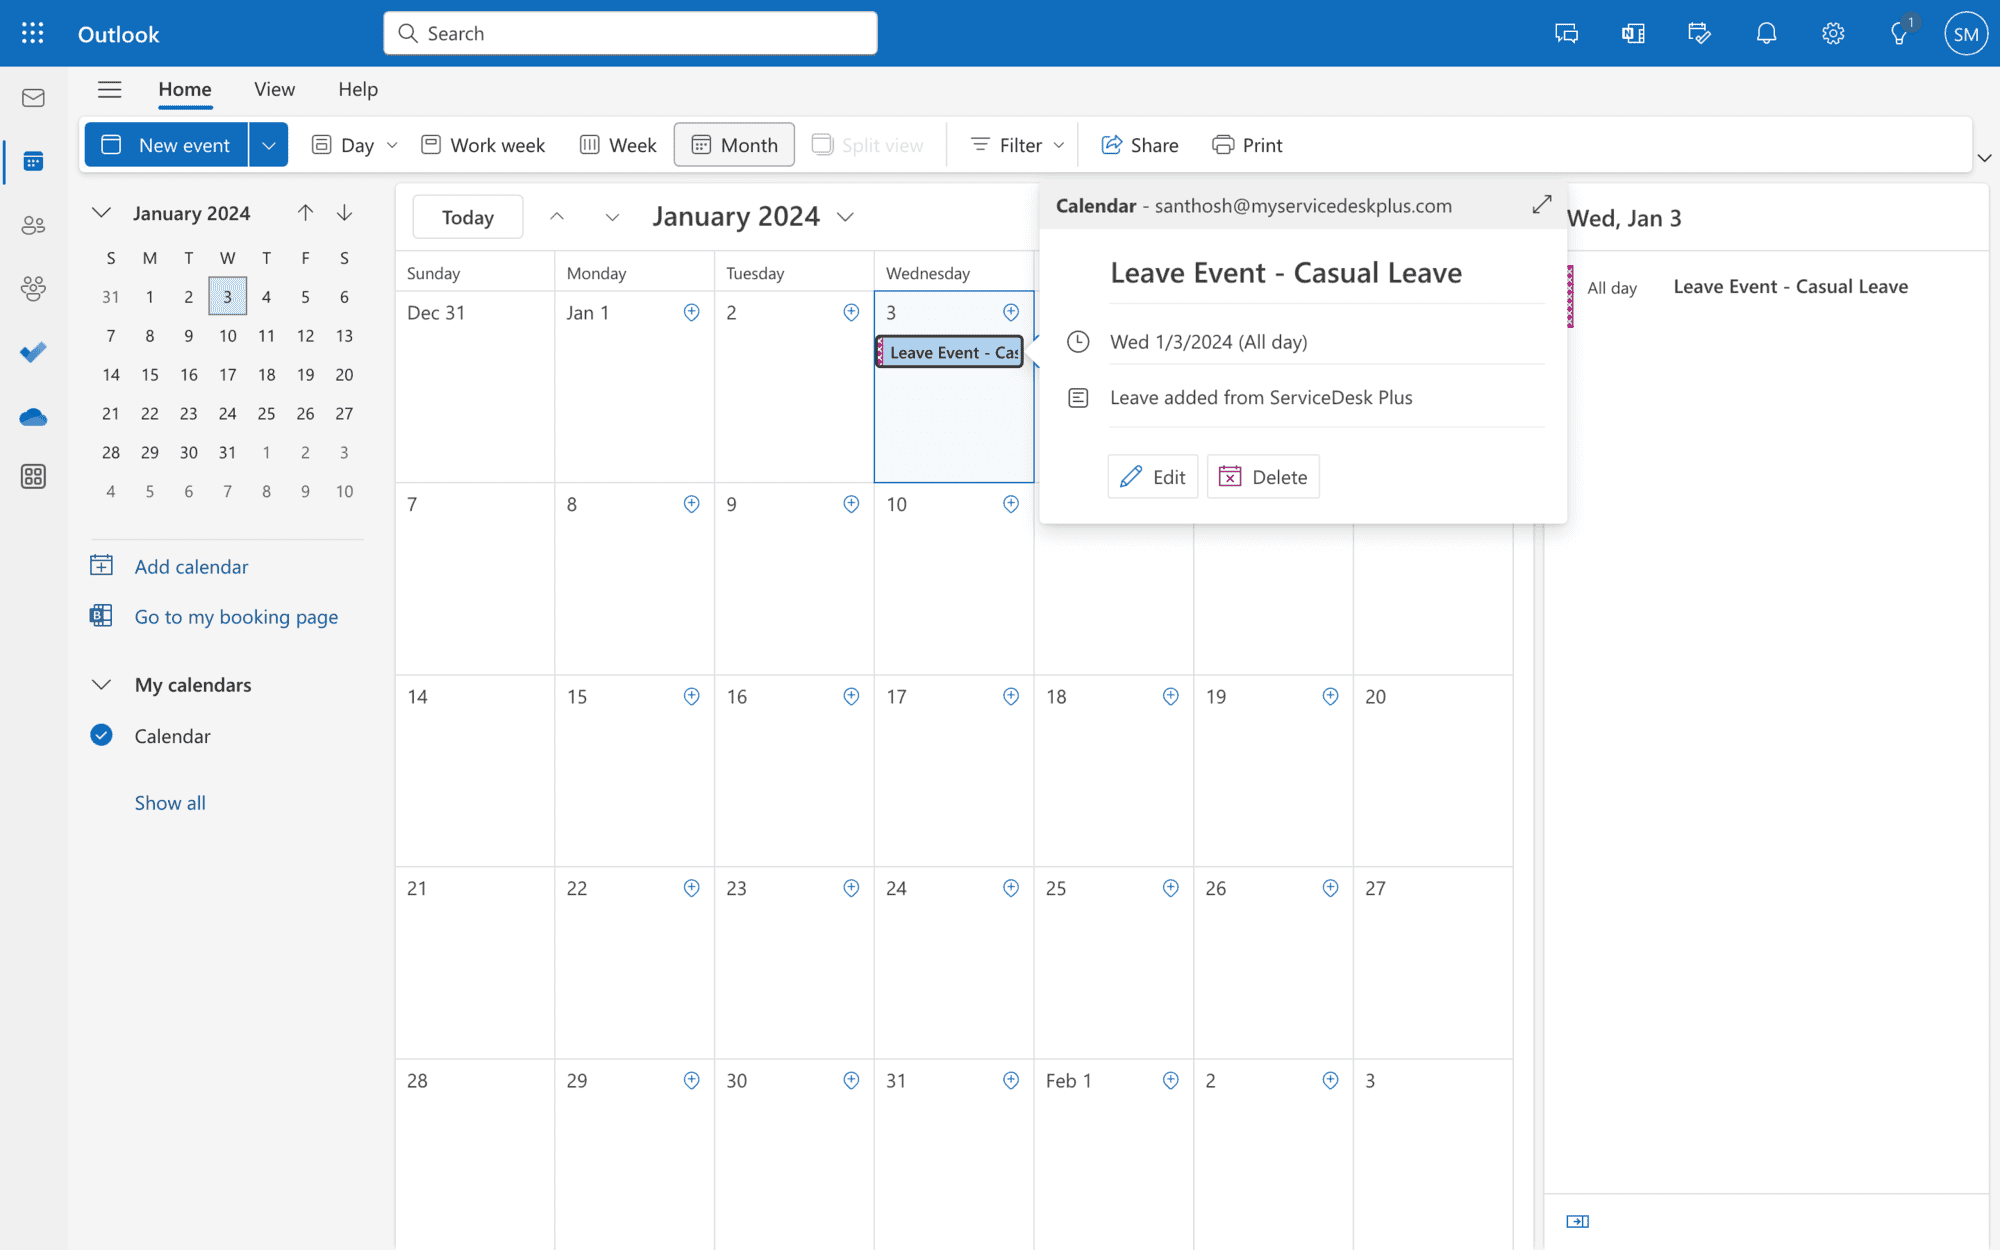 Calendar integration